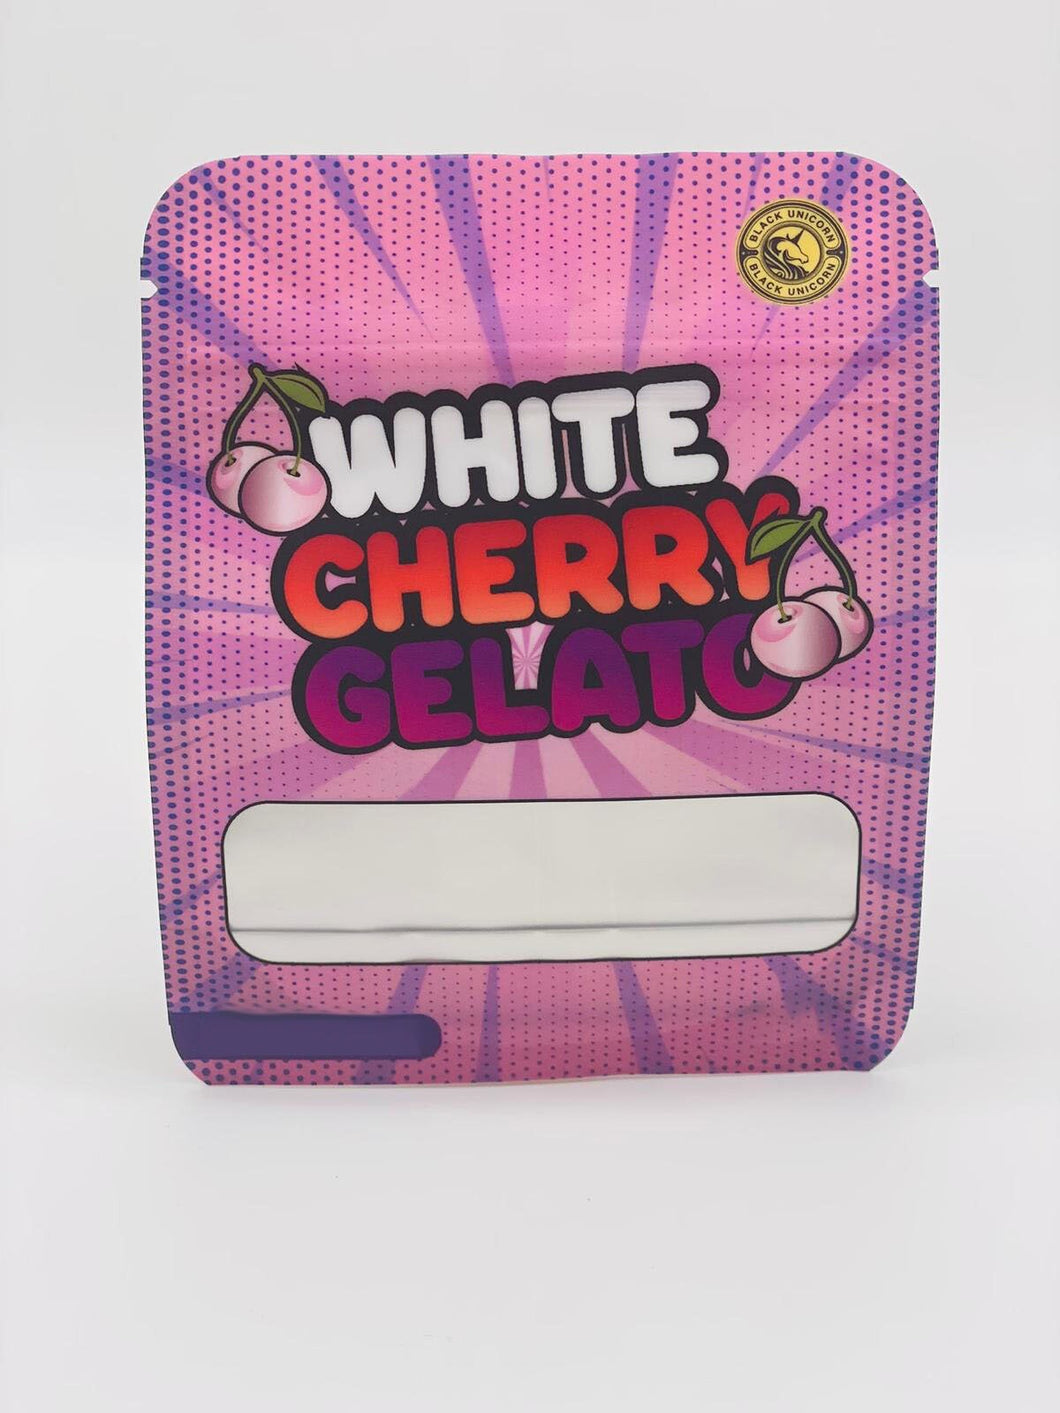 50 White Cherry Gelato 3.5 gram empty Mylar bags